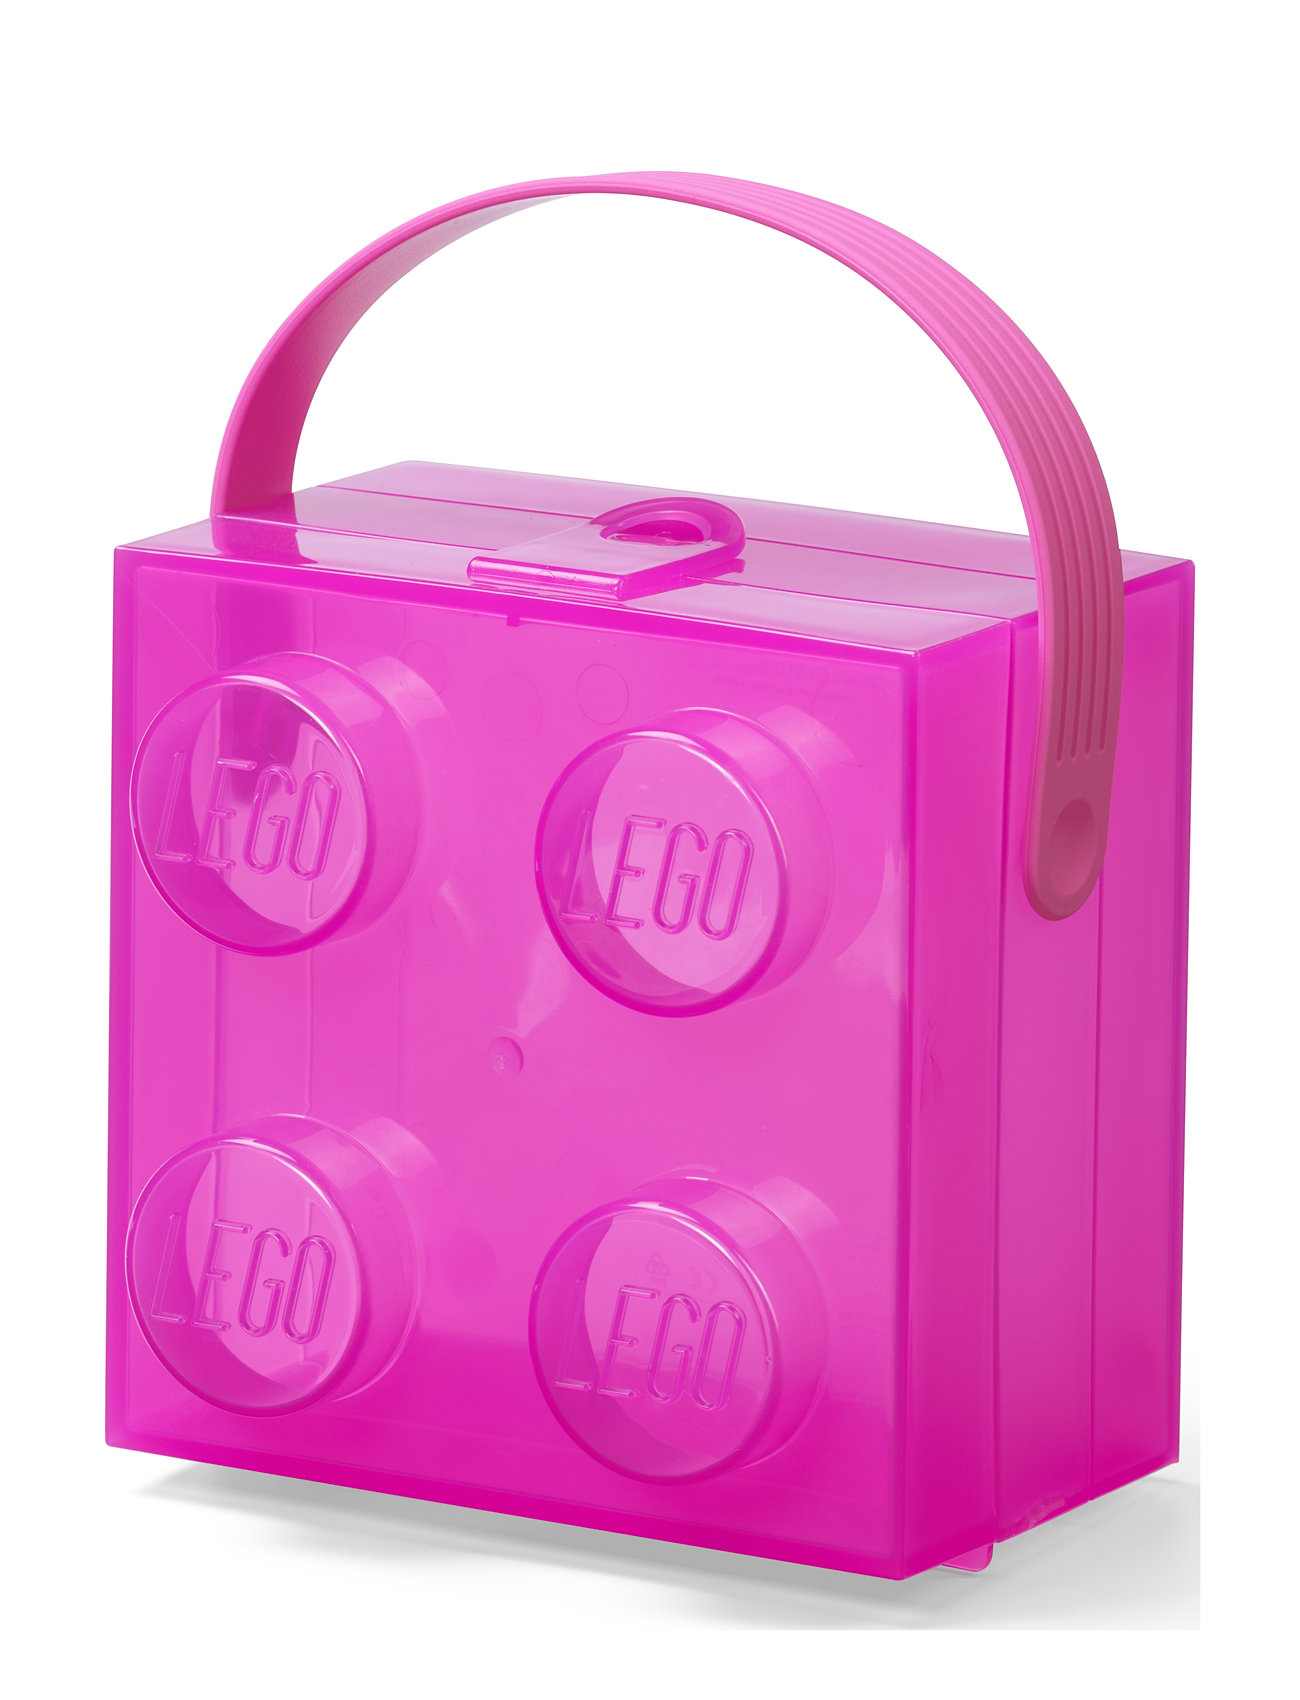 Lego Box W. Handle Translucent Violet Home Kids Decor Storage Storage Boxes Pink LEGO STORAGE